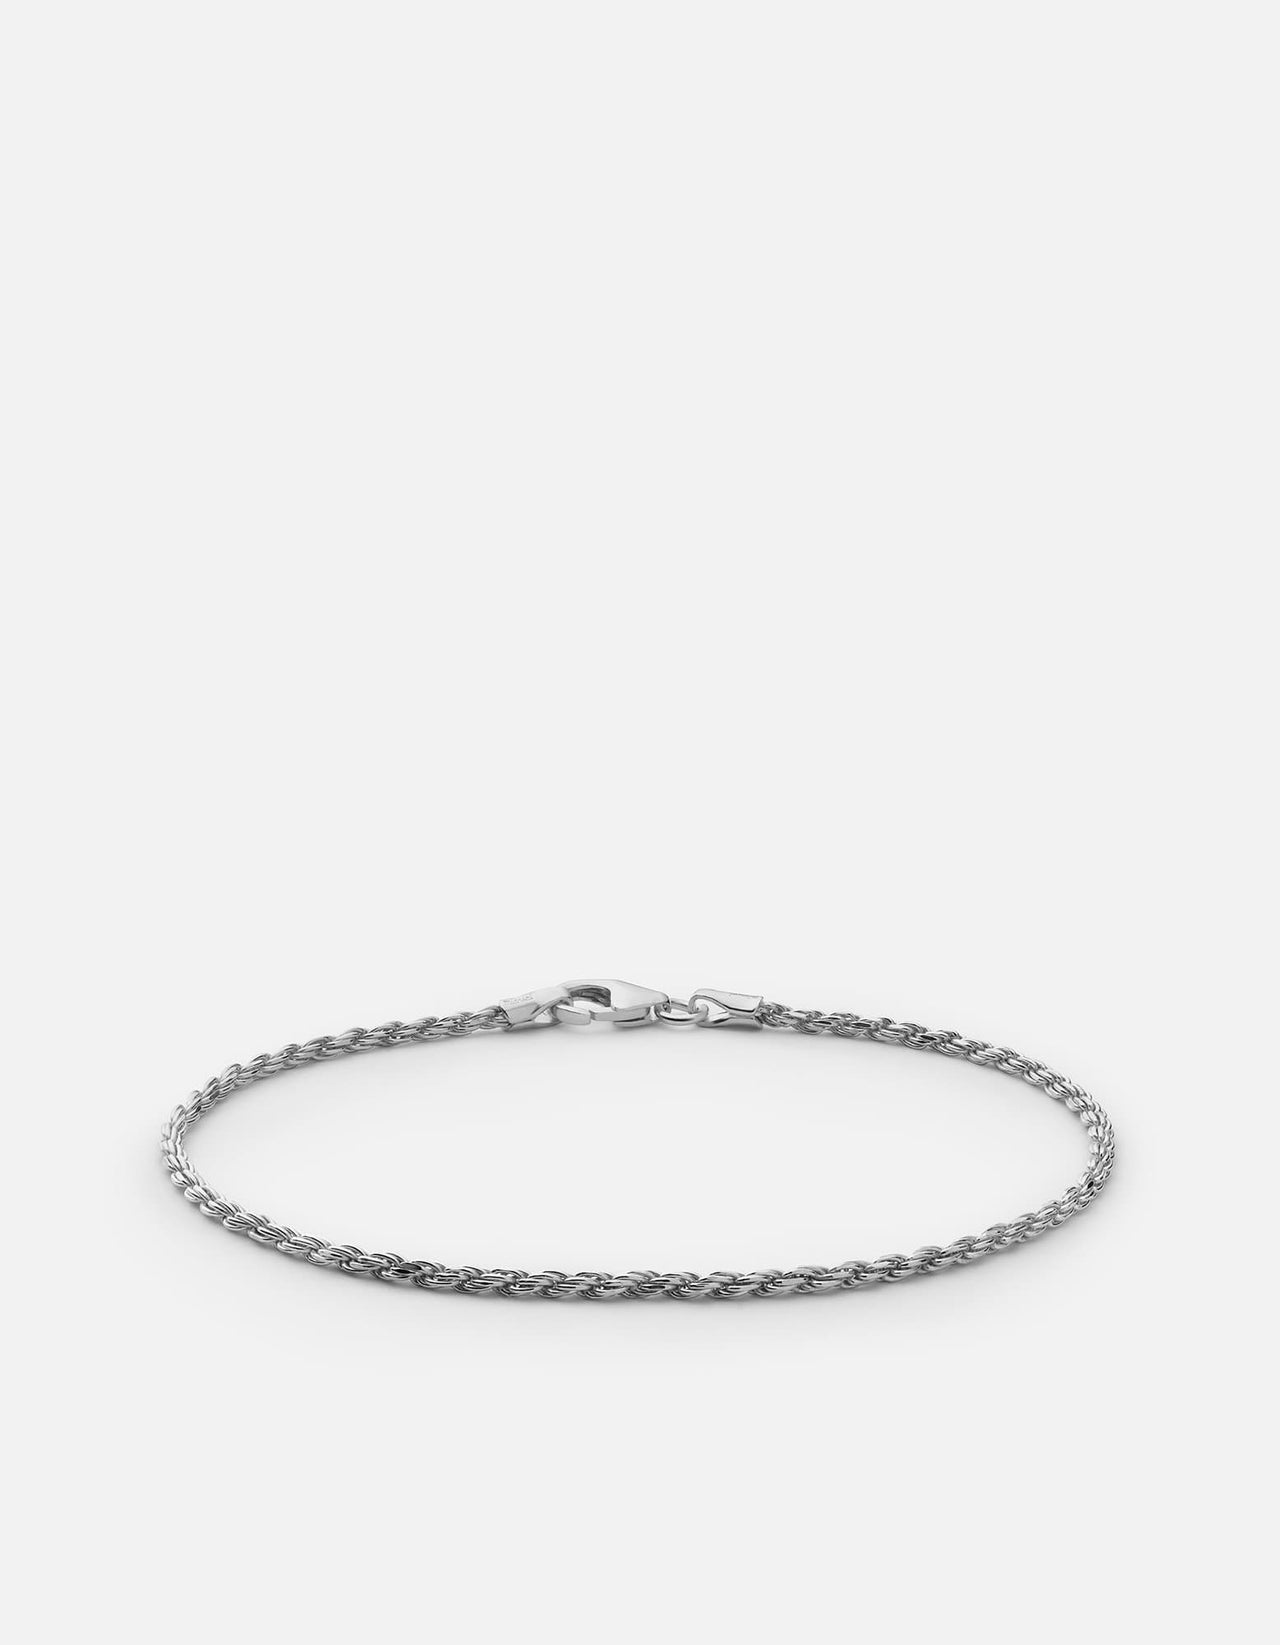 Miansai Men's 1.8mm Rope Chain Bracelet, Sterling Silver, Size L